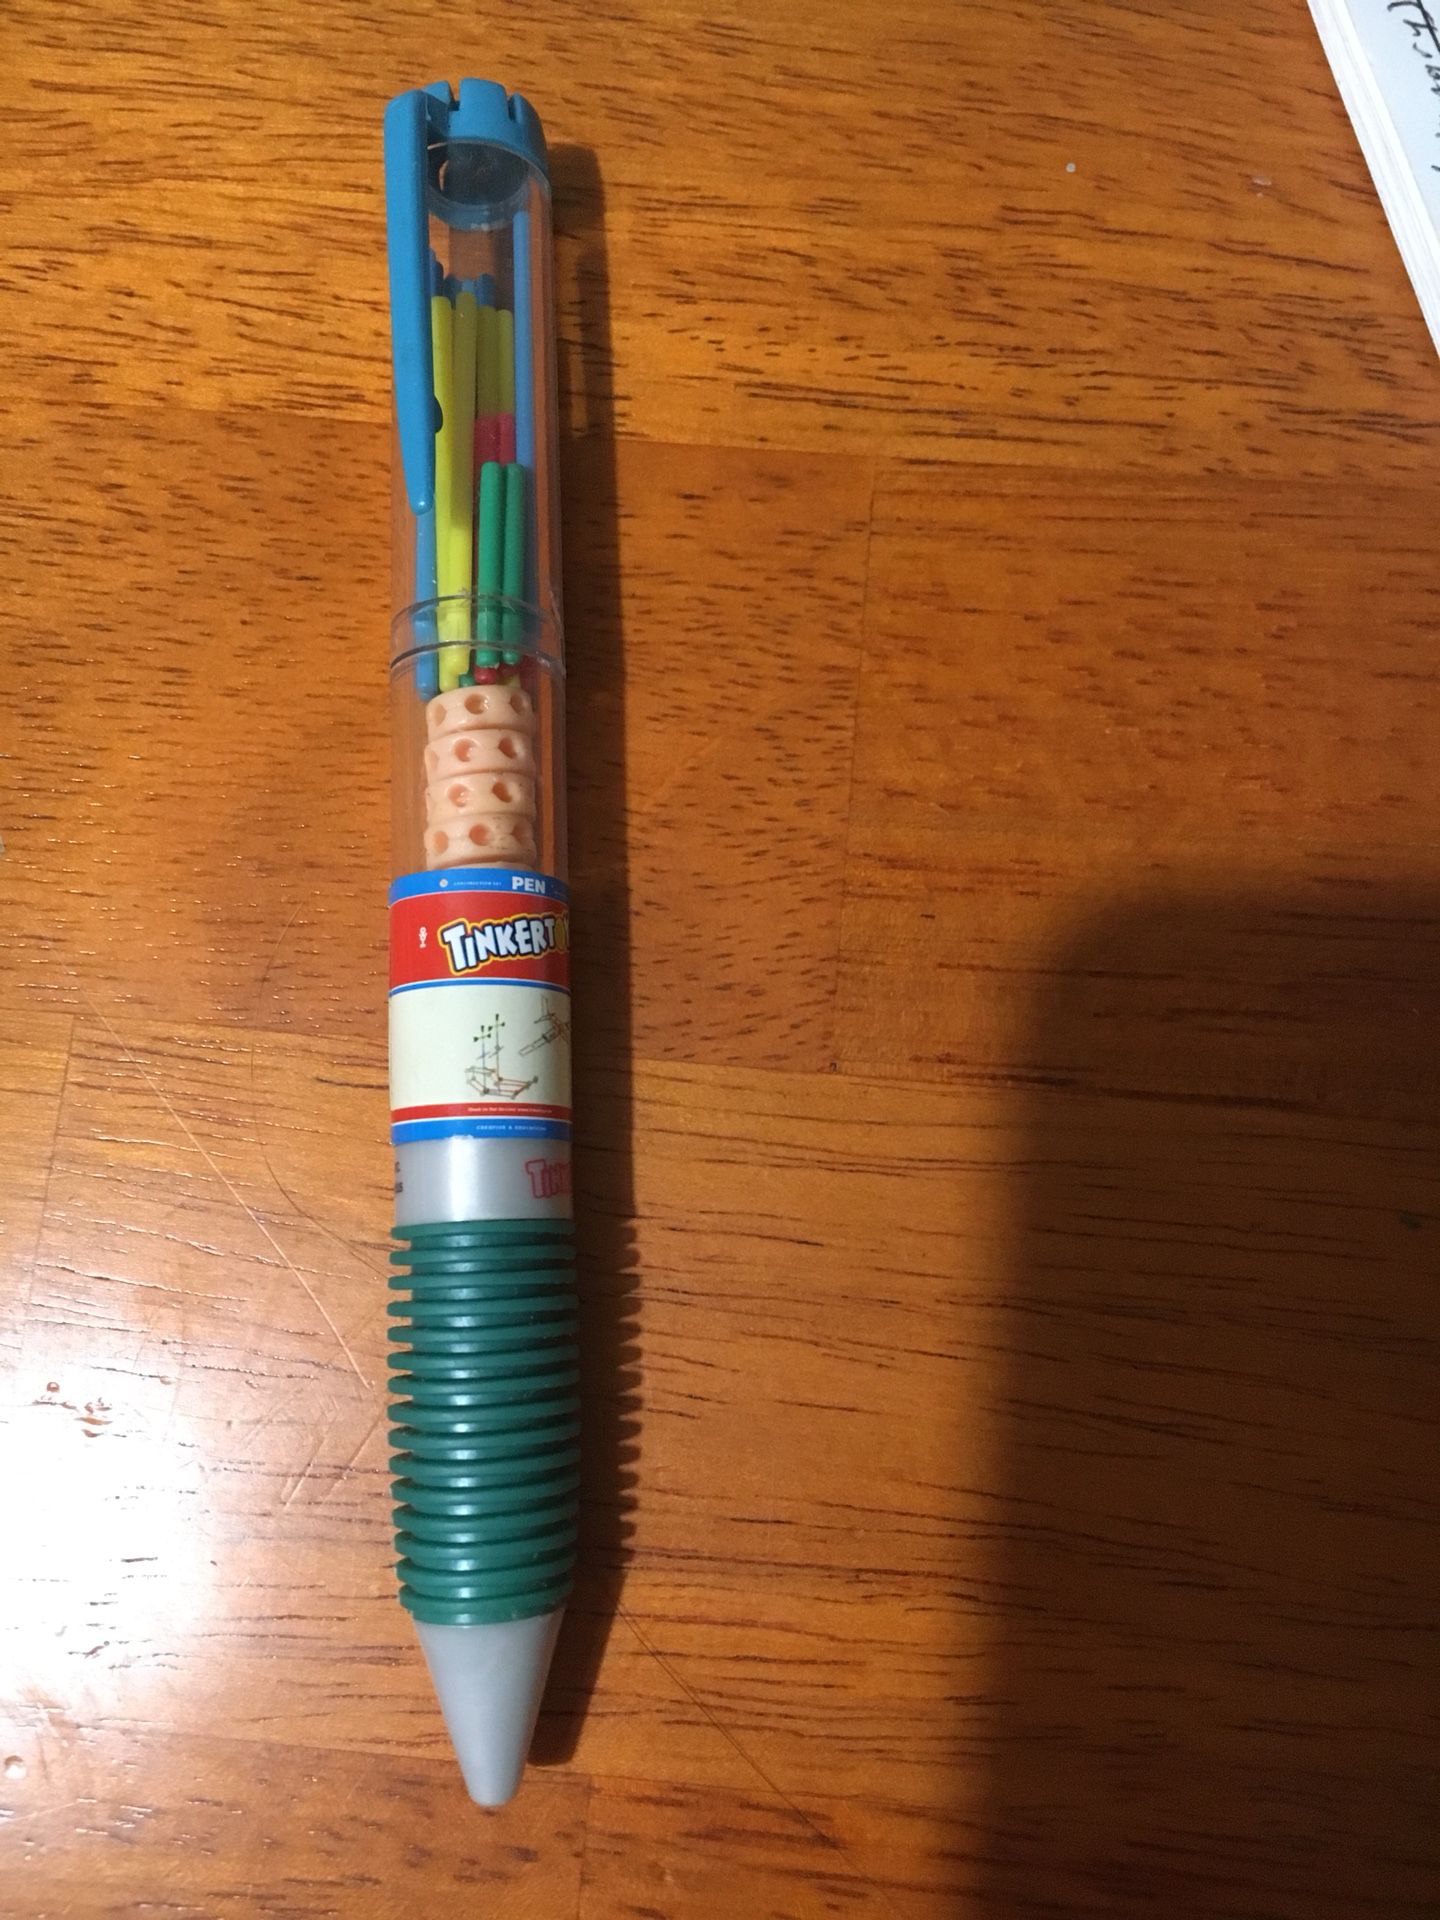 Hasbro Tinker Toy Pen